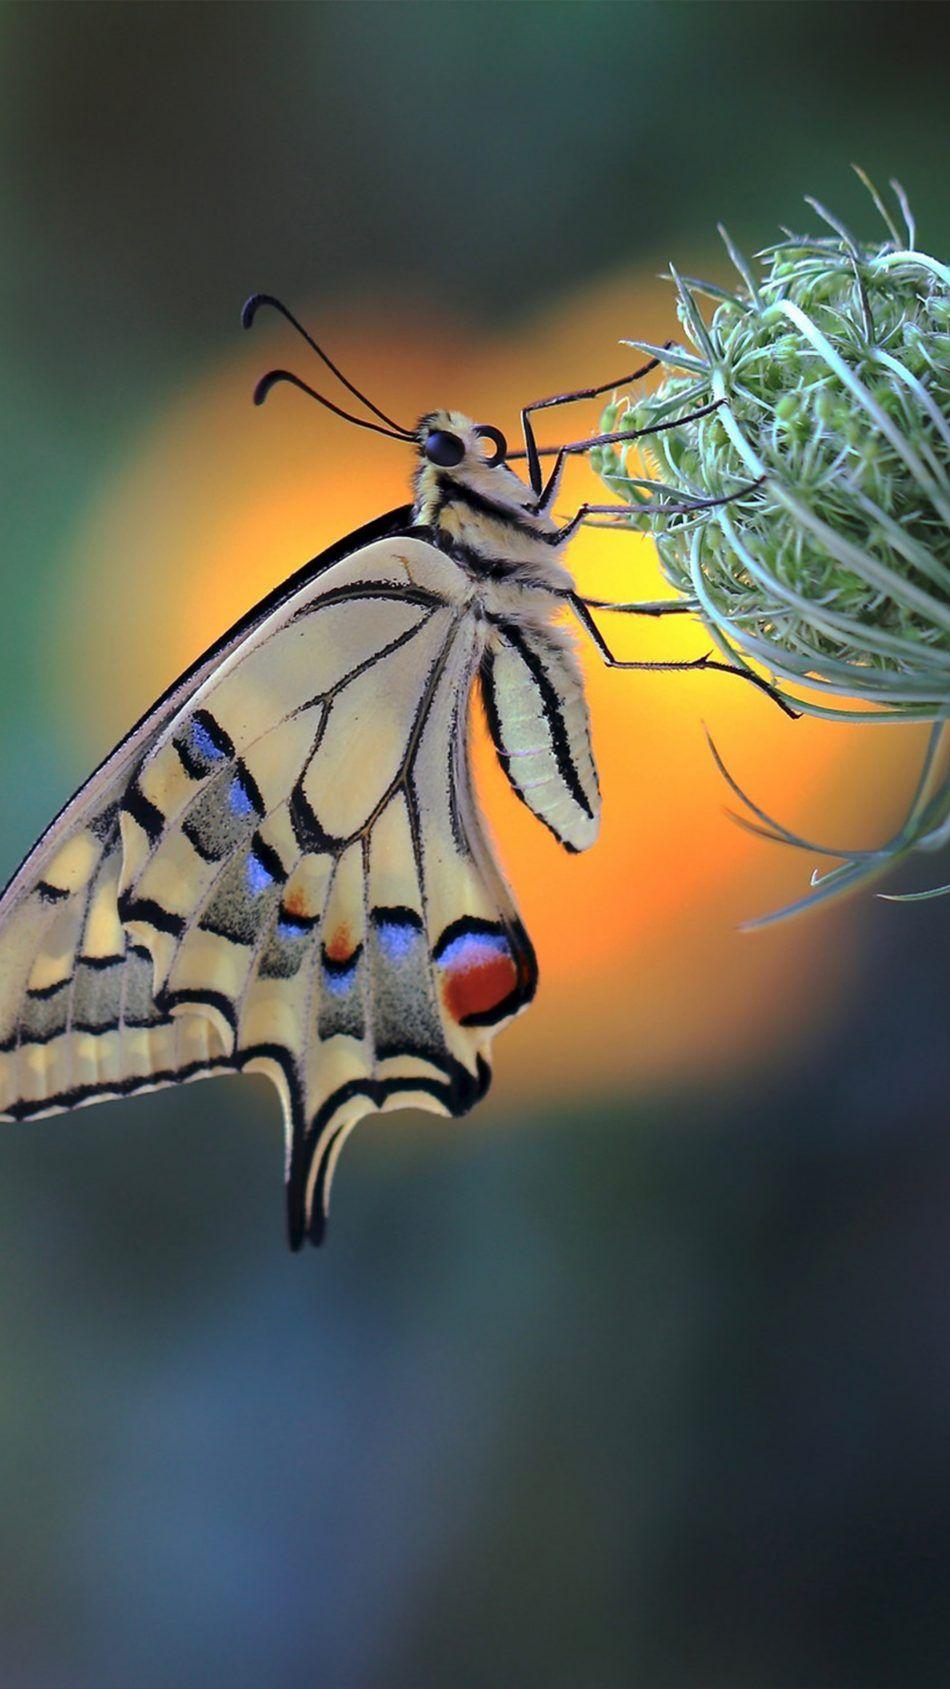 Butterfly Insect Flower Macro 4K Ultra HD Mobile Wallpaper. Insects, Beautiful butterflies, Pet birds